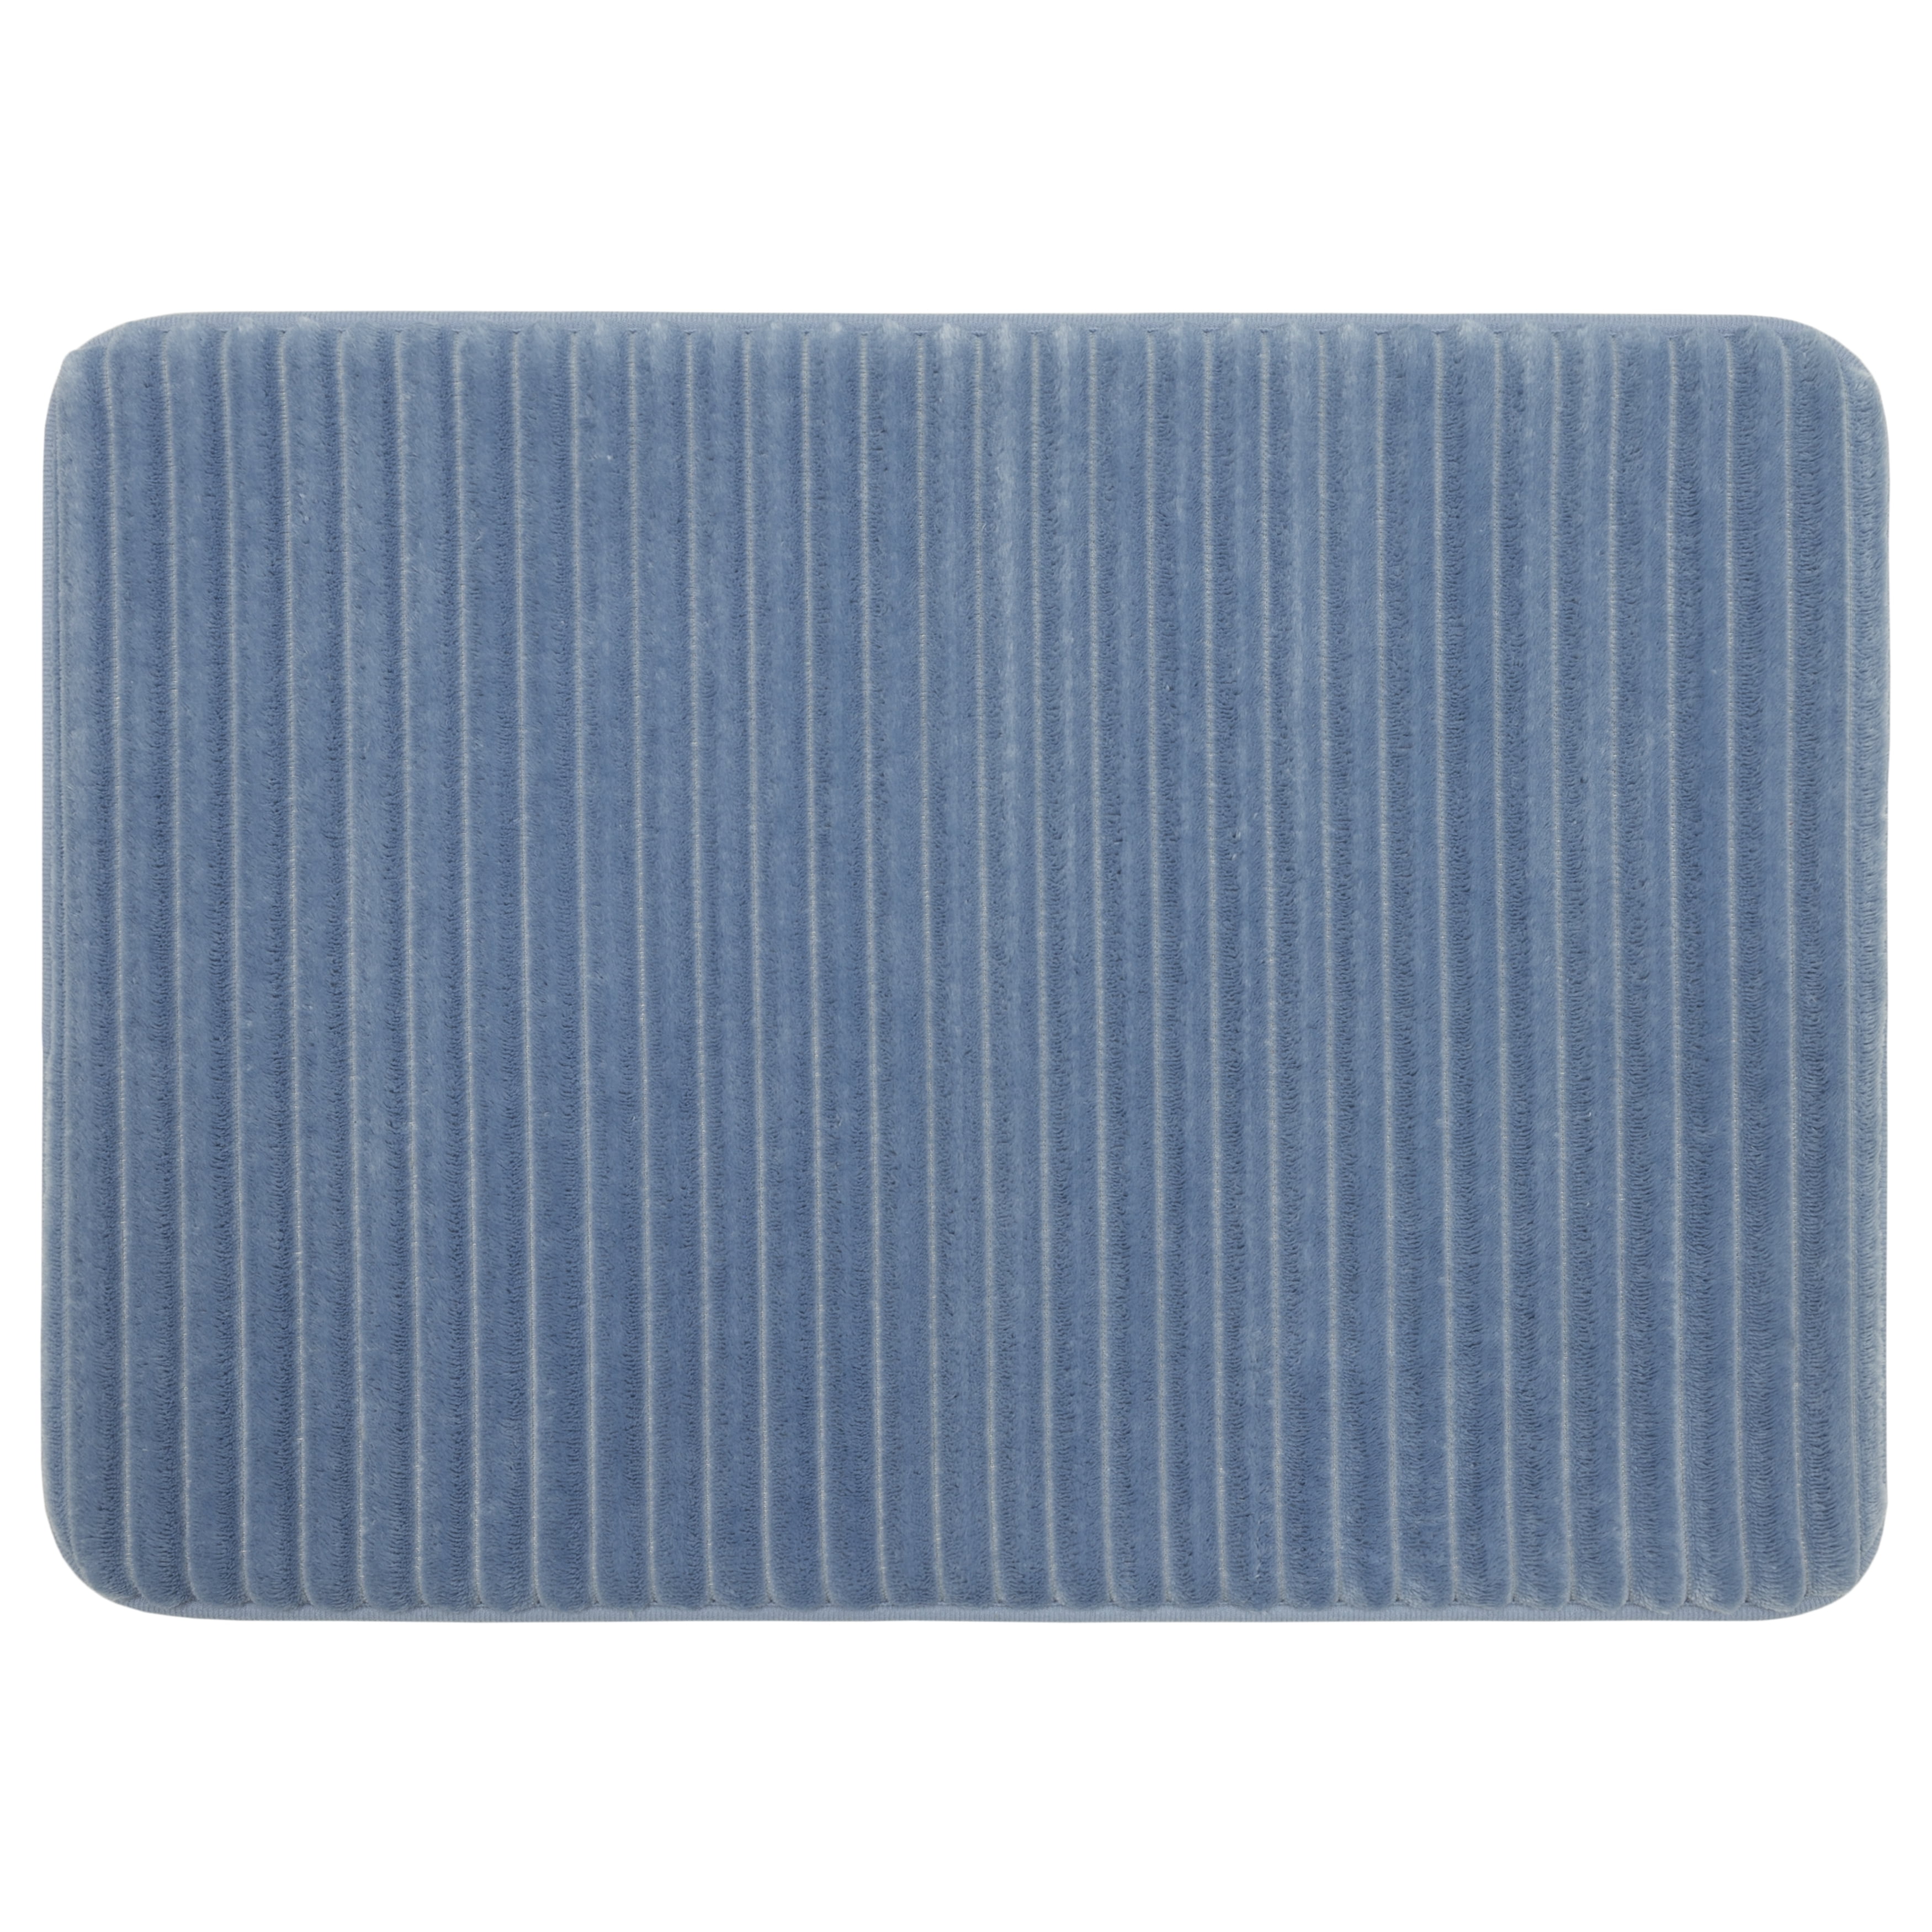 Mainstays Quick Dry Memory Foam Bath Rug, Blue Linen, 17" x 24"